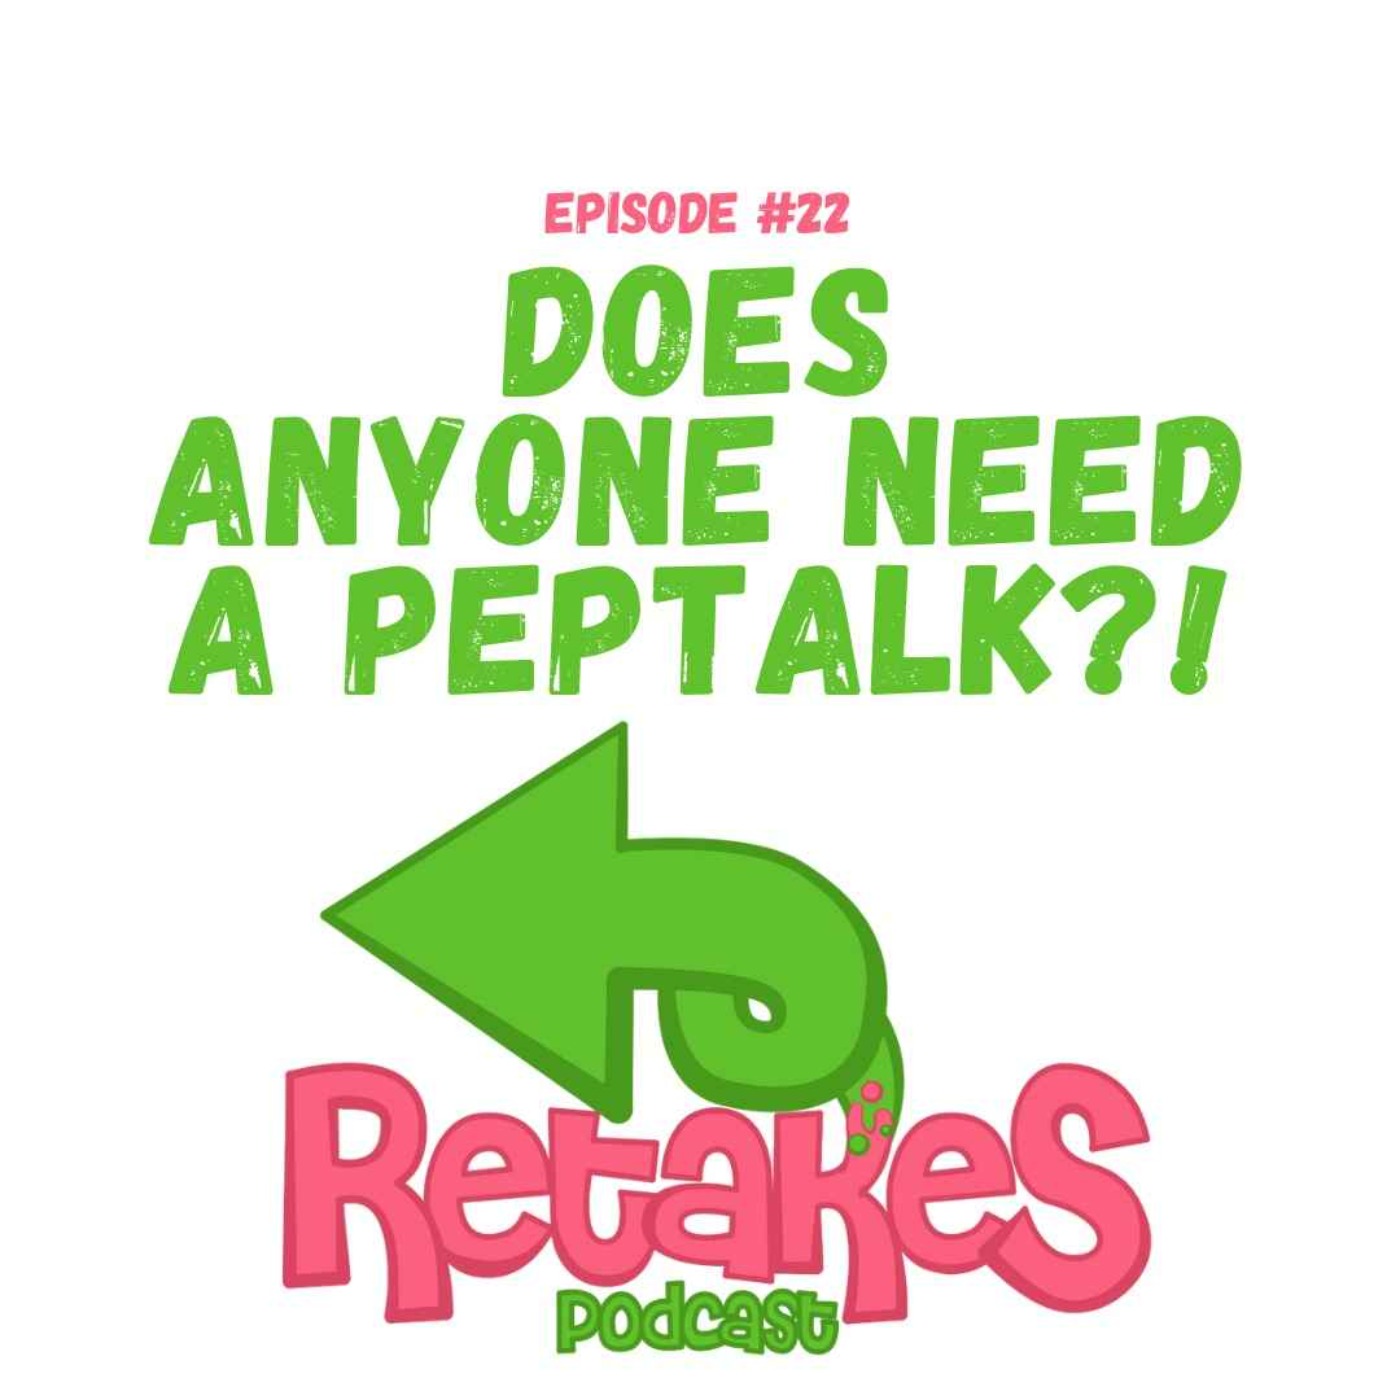 Does Anyone Need A Peptalk?!